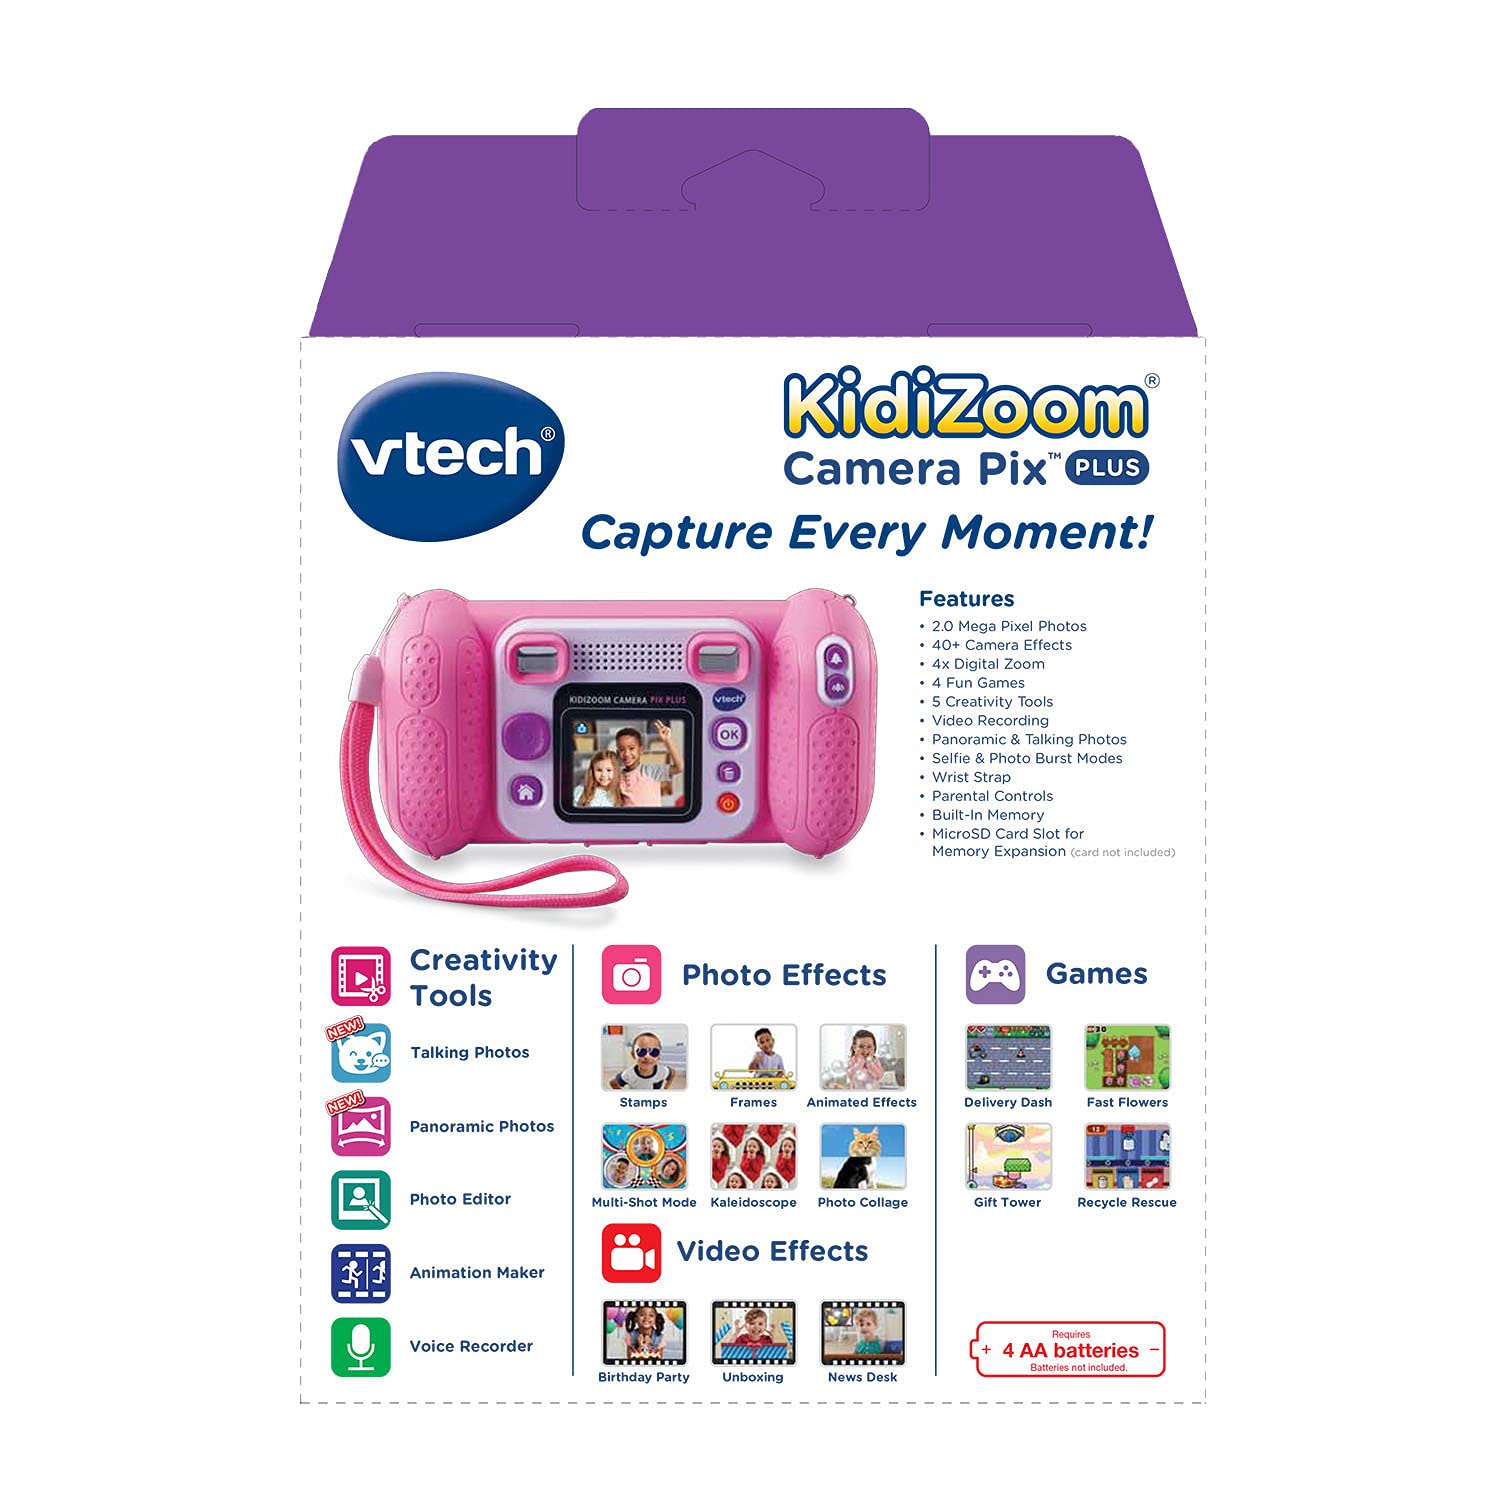 VTech KidiZoom Camera Pix Plus, Pink